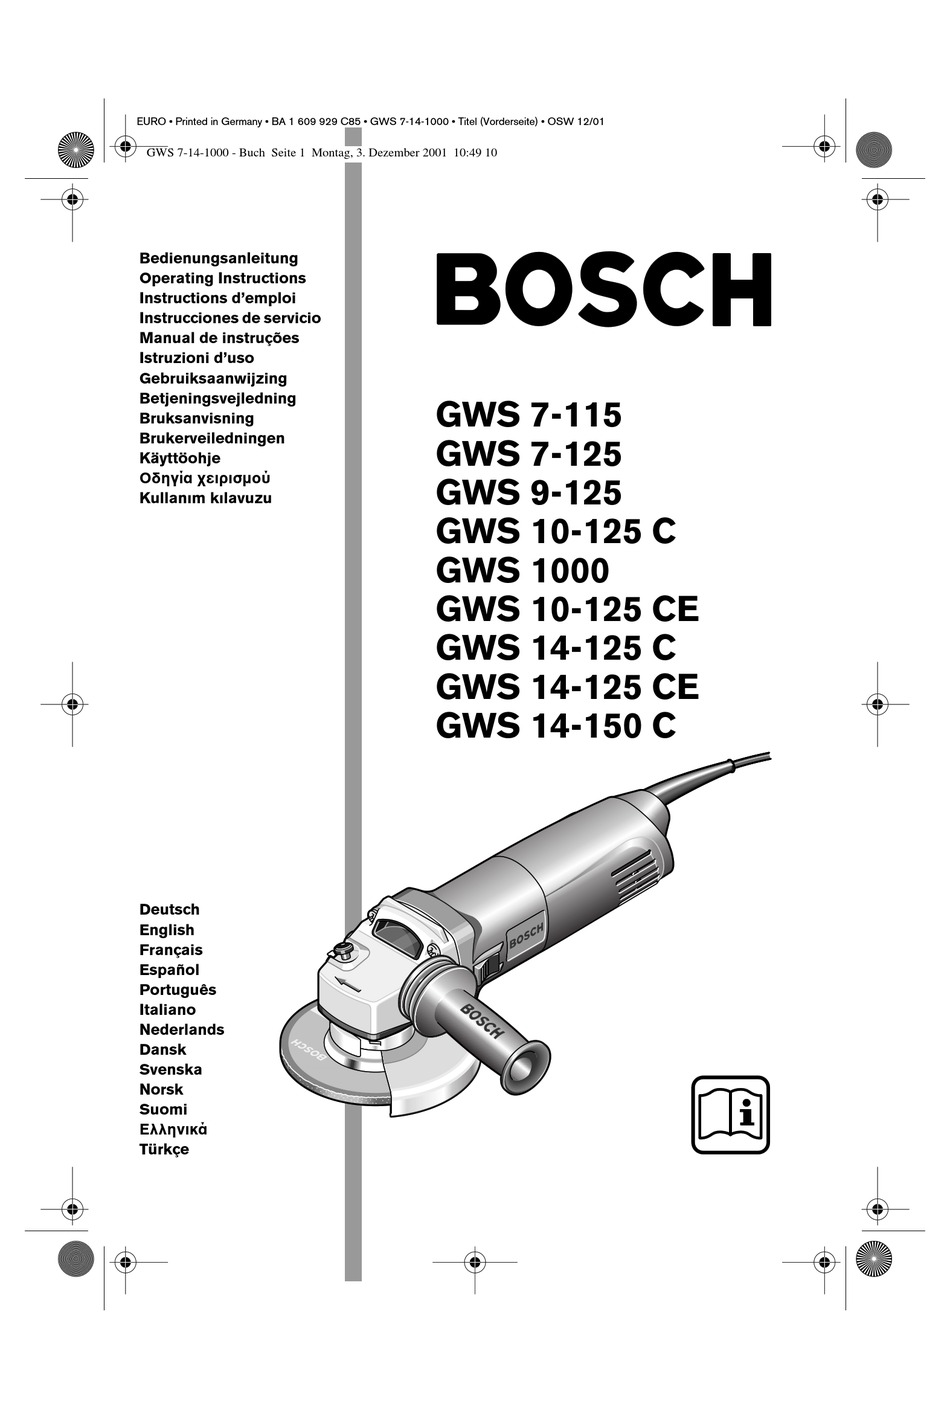 BOSCH GWS 7-115 OPERATING INSTRUCTIONS MANUAL Pdf Download | ManualsLib